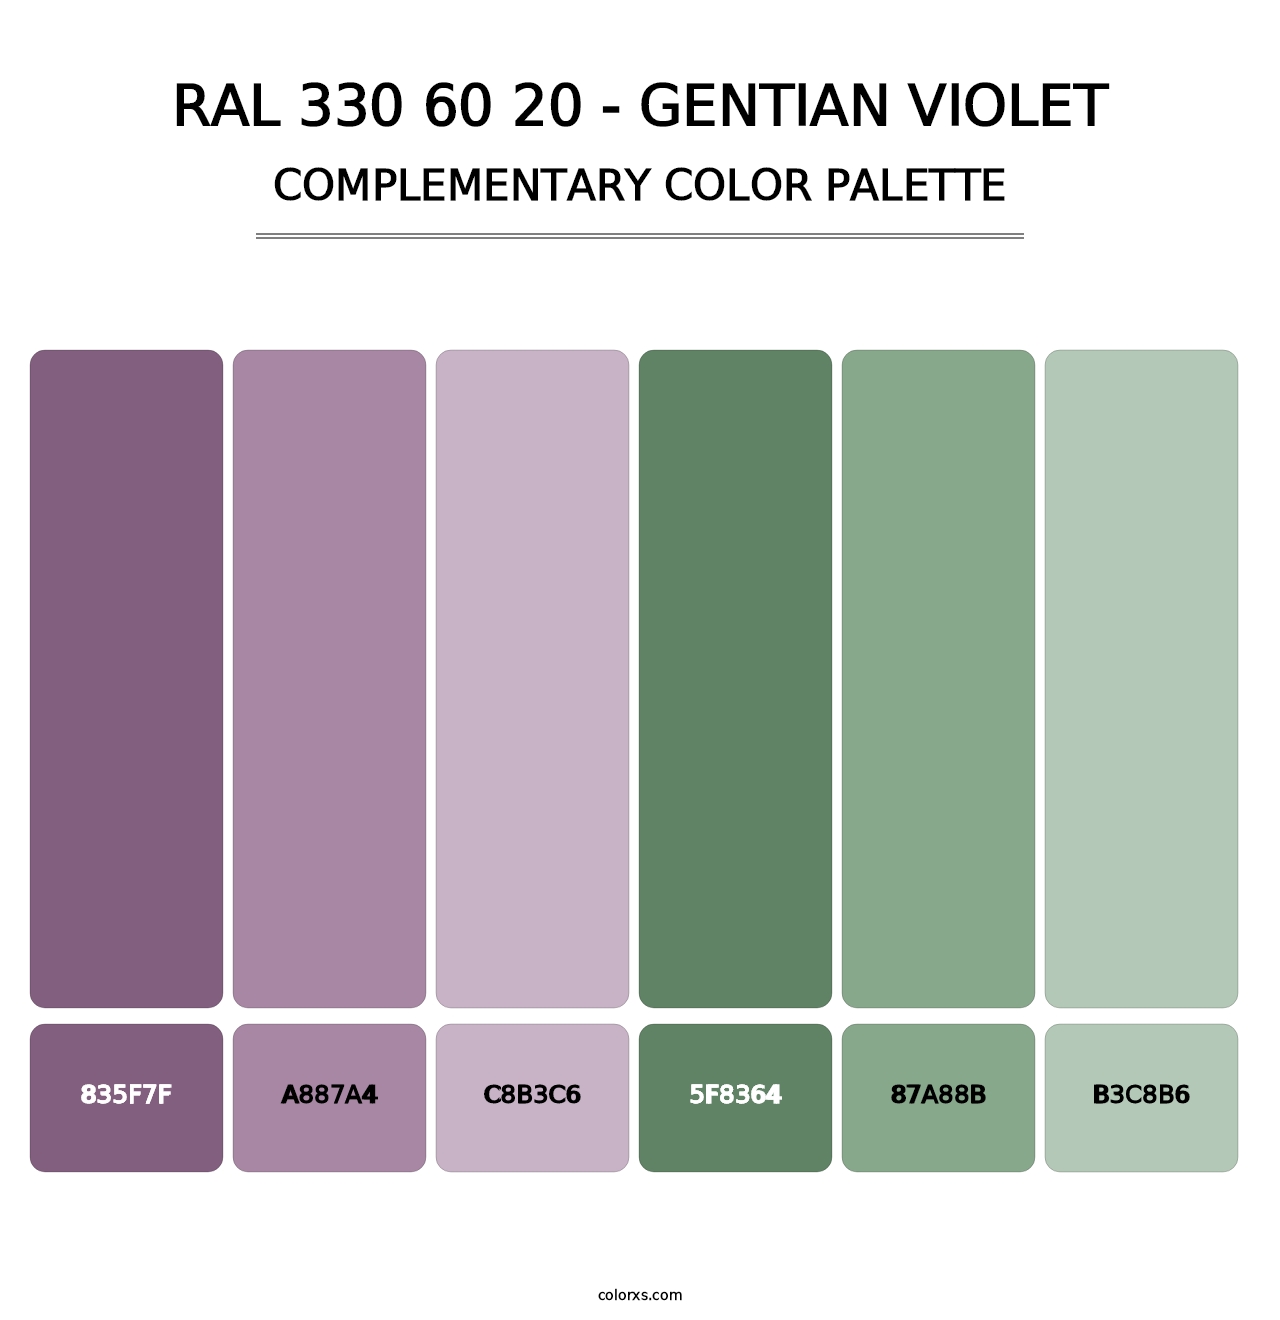 RAL 330 60 20 - Gentian Violet - Complementary Color Palette